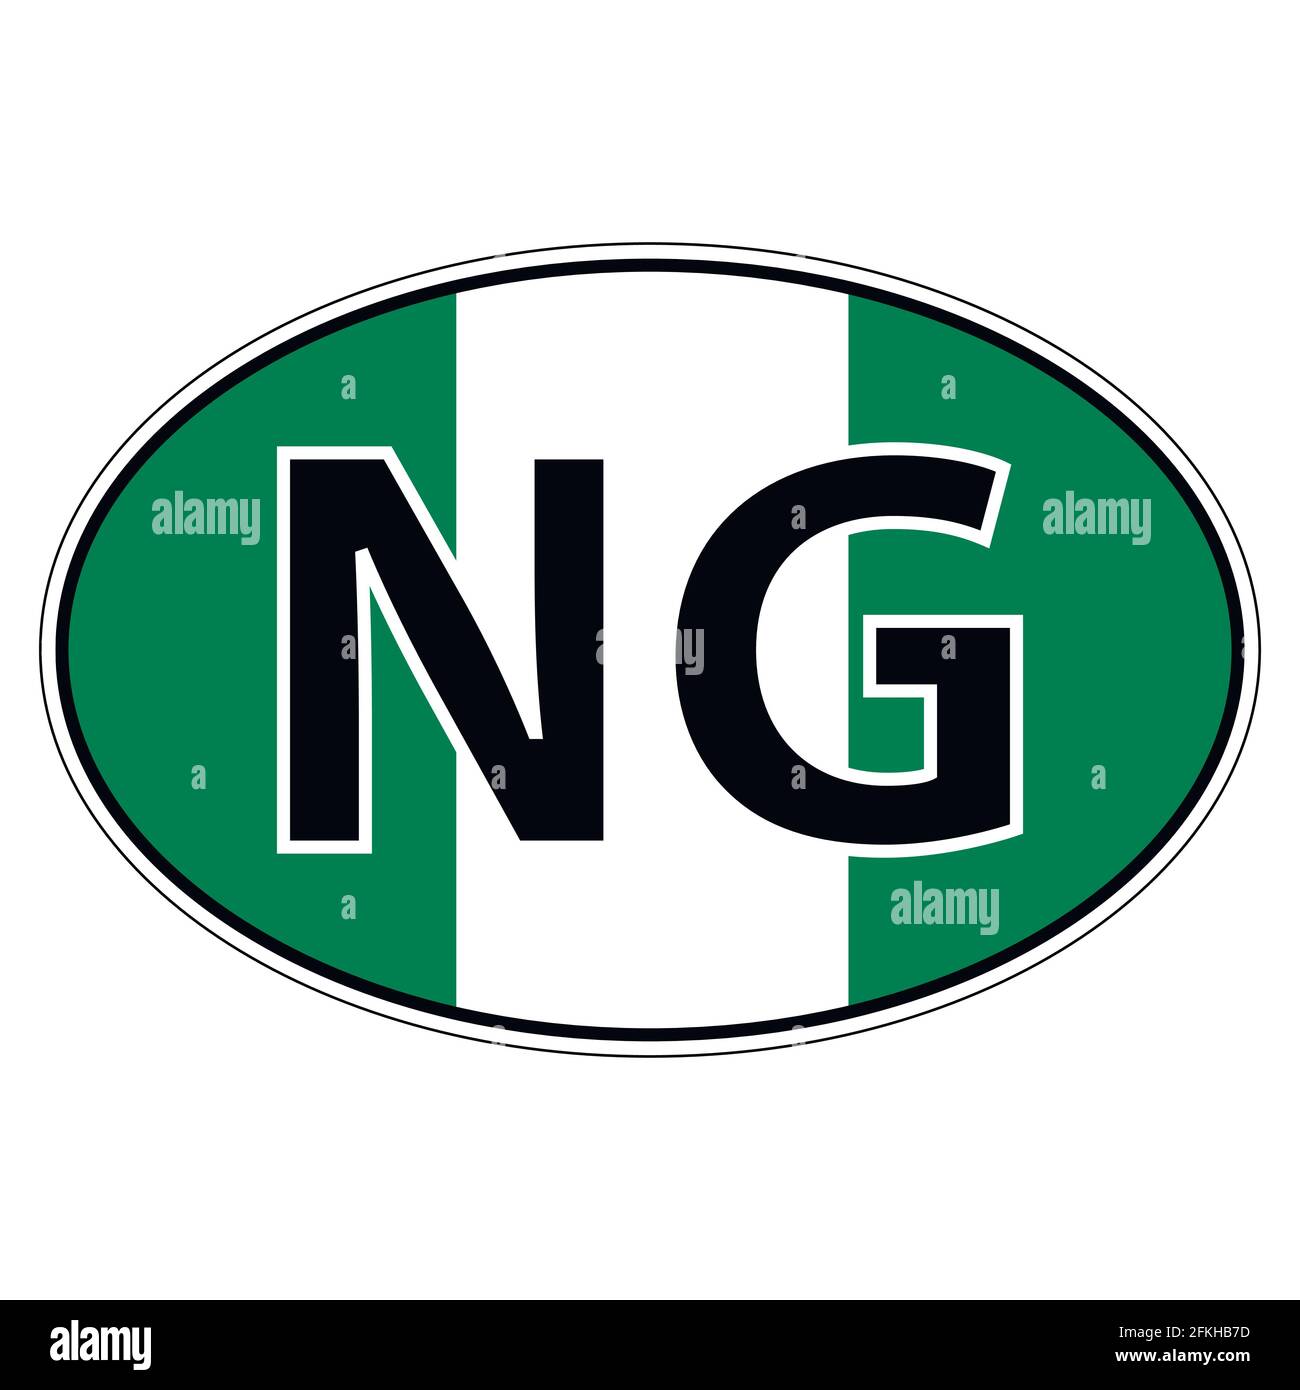 Sticker on car, flag Federal Republic of Nigeria Stock Vector